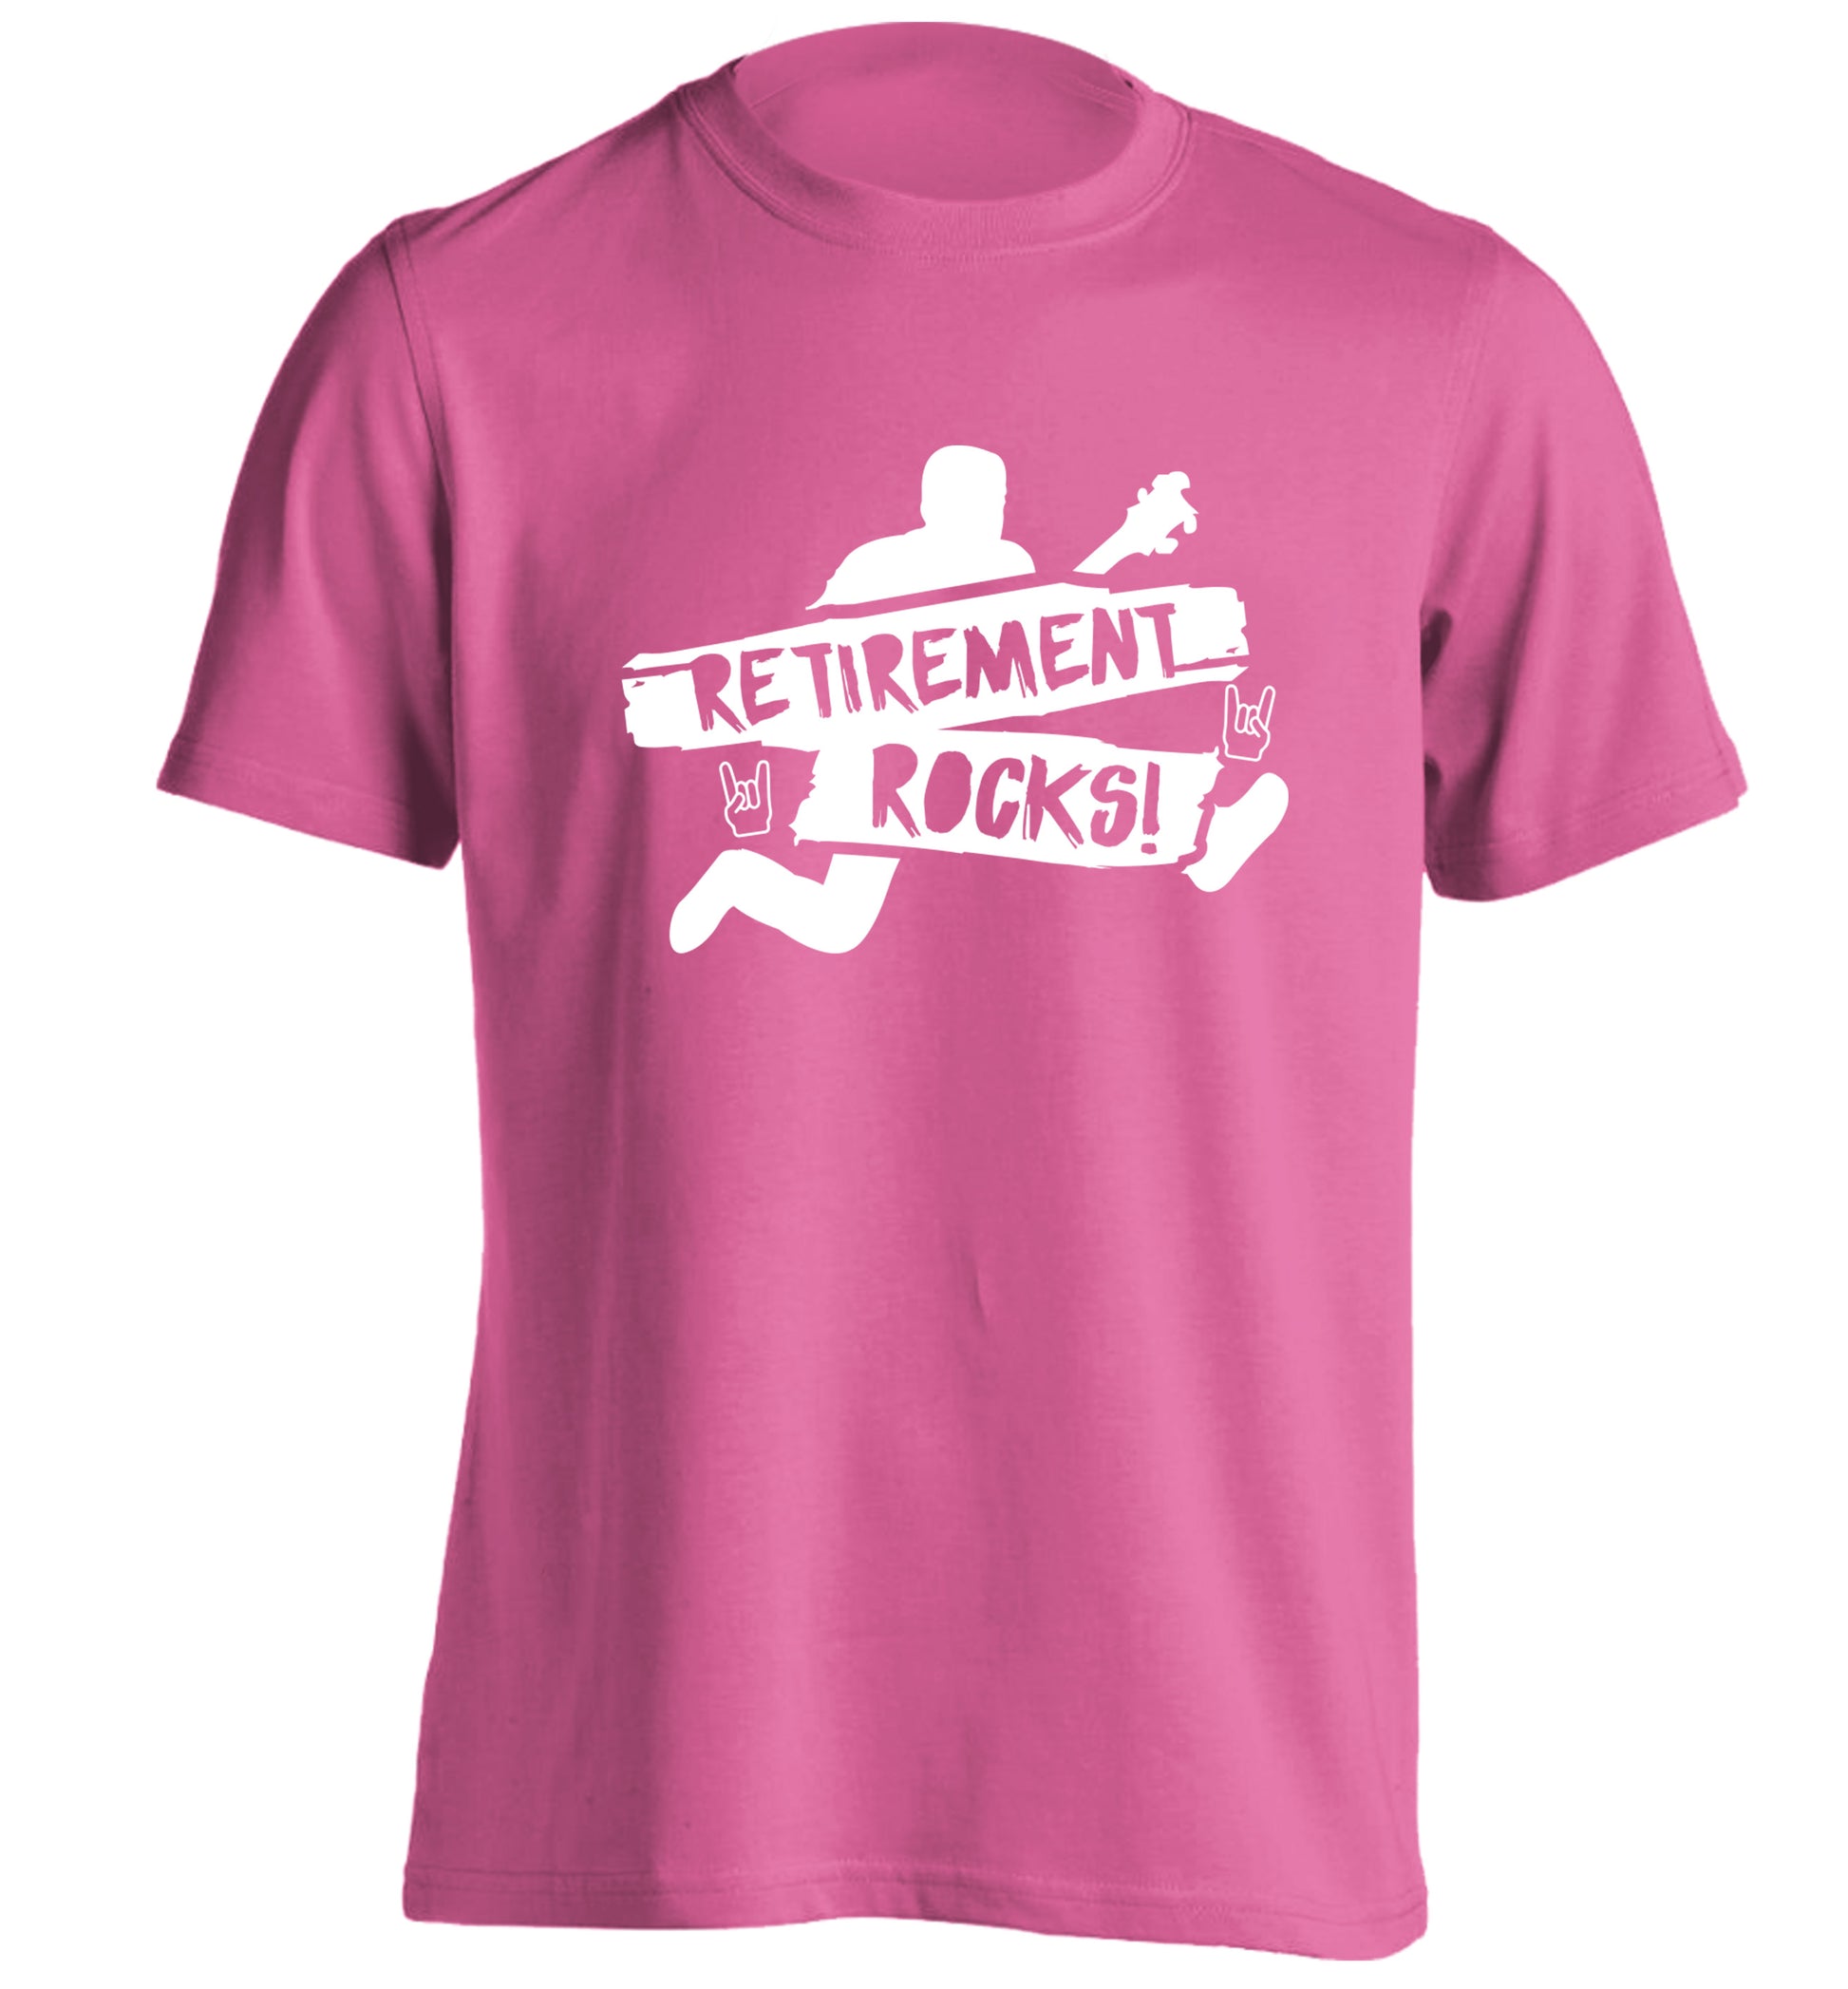 Retirement Rocks adults unisex pink Tshirt 2XL